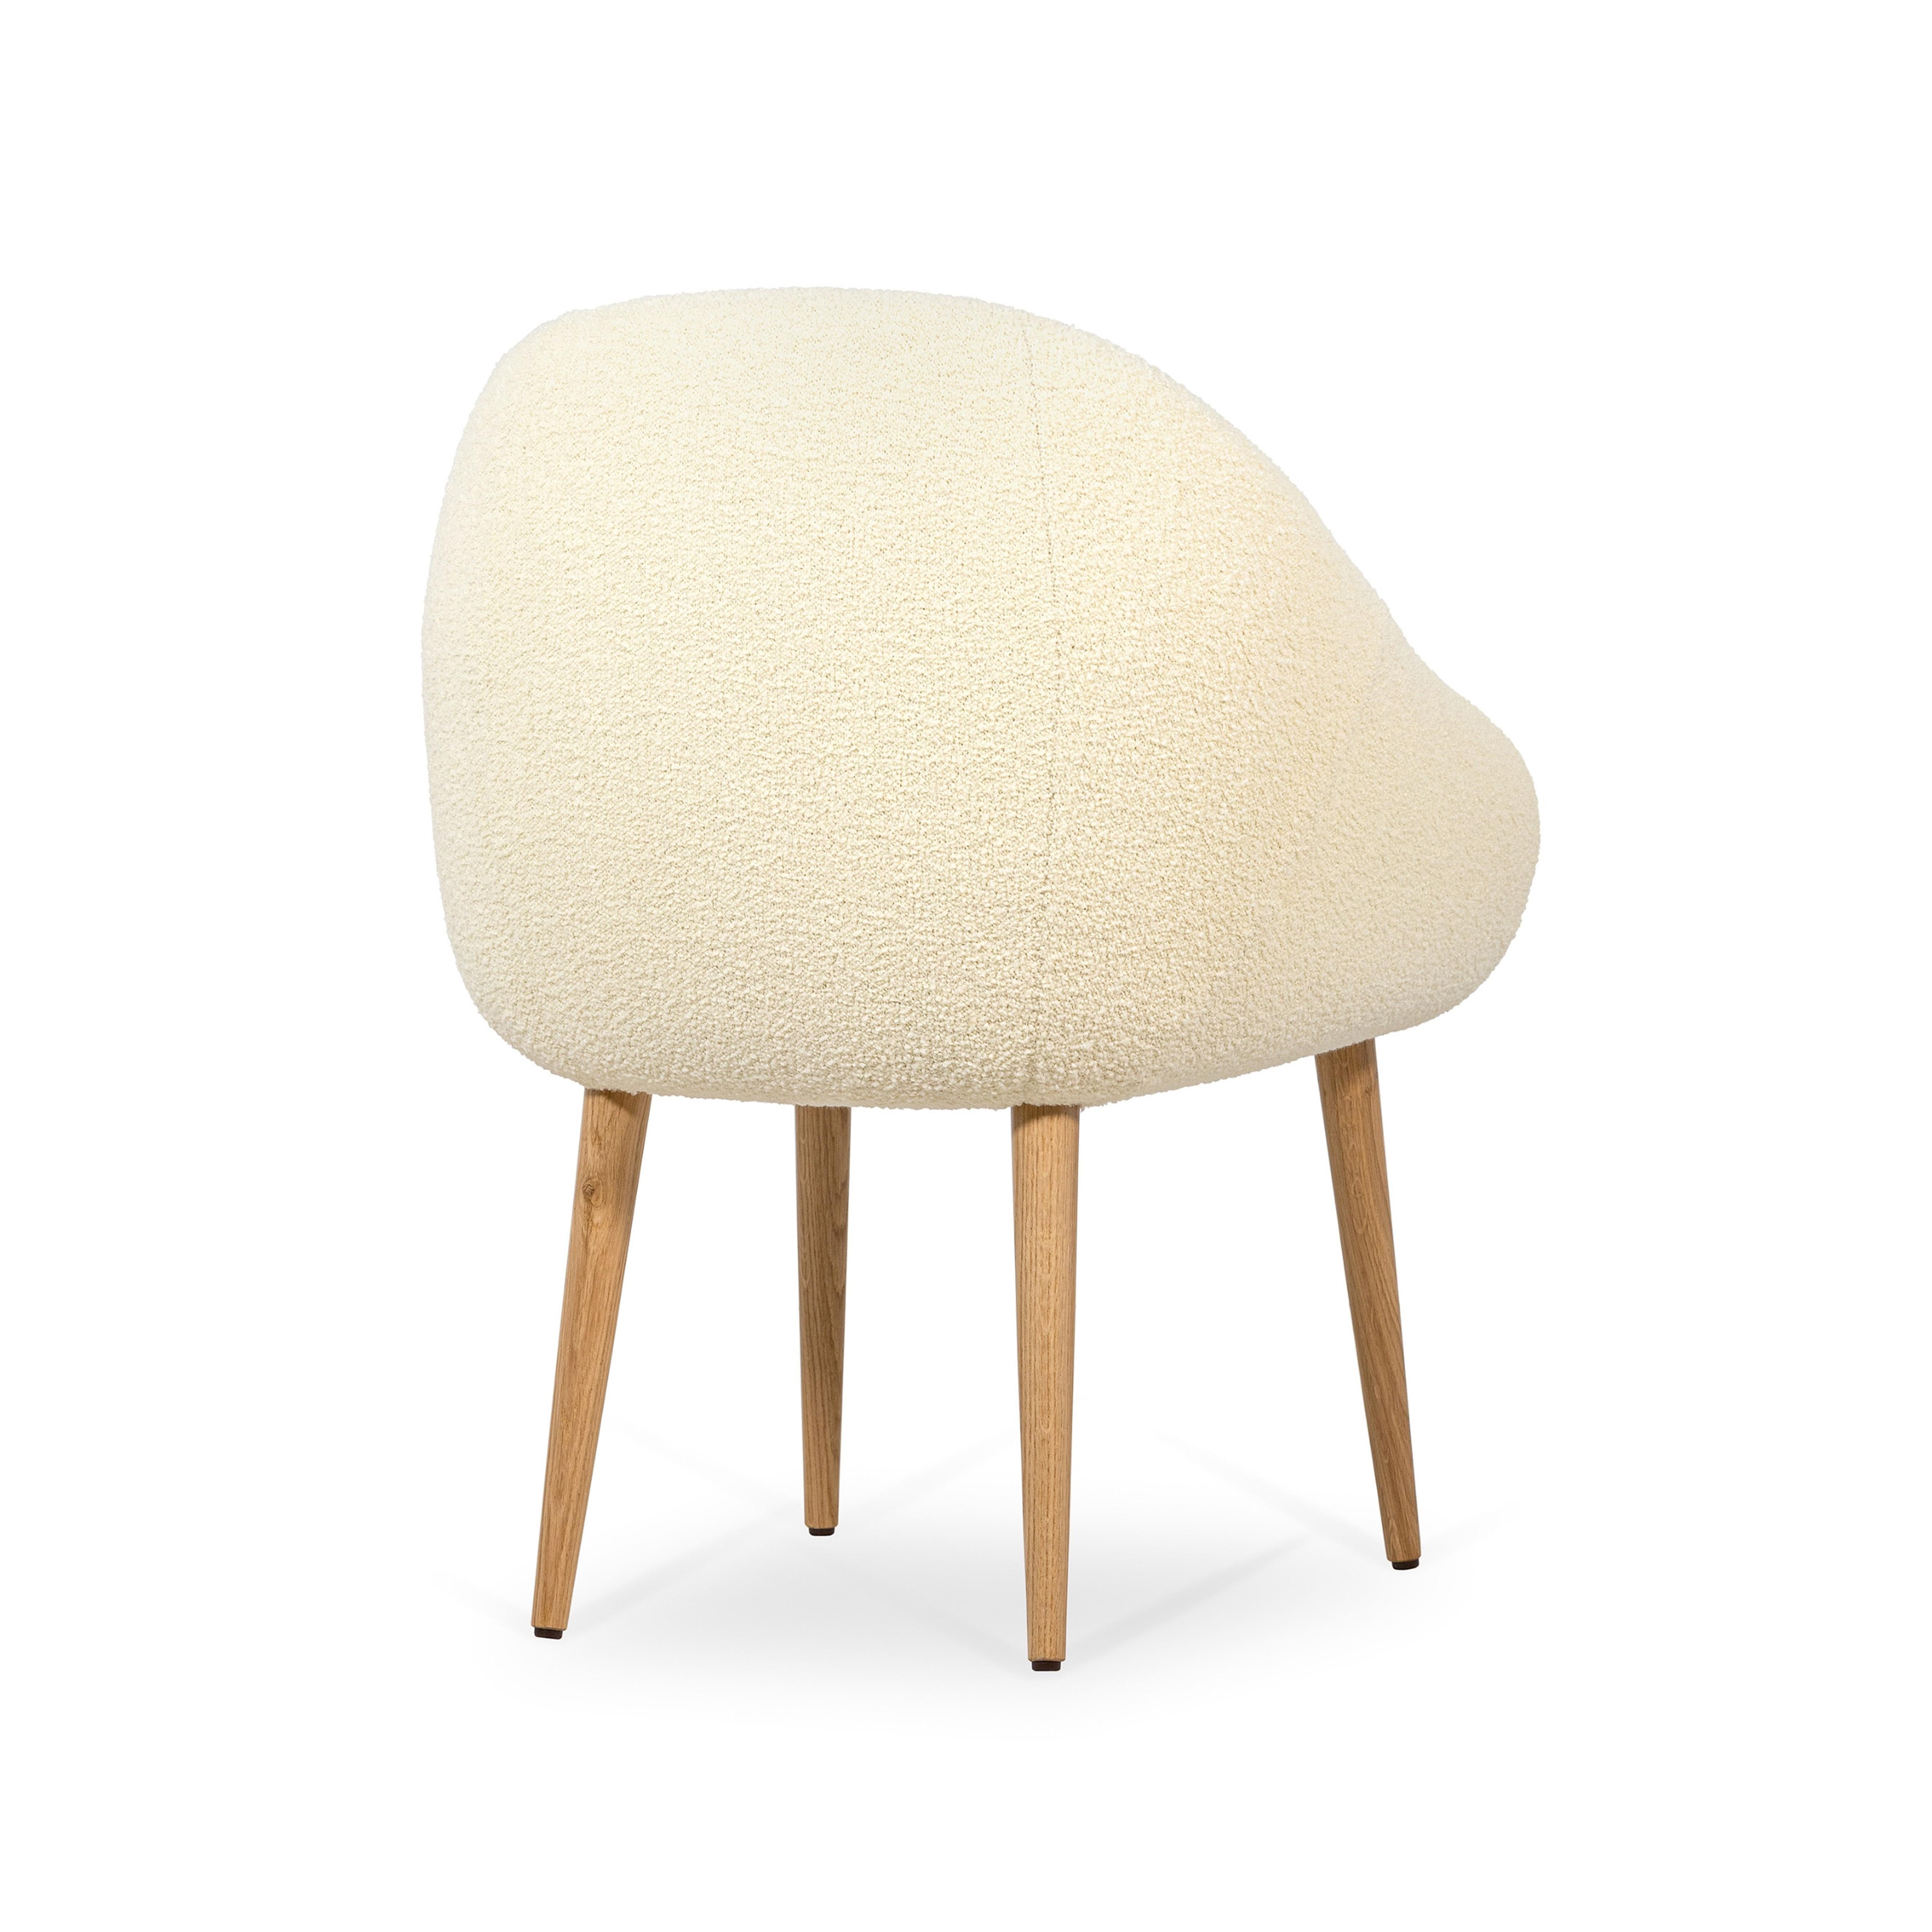 Portuguese Niemeyer Dining Chair, COM, Insidherland by Joana Santos Barbosa For Sale